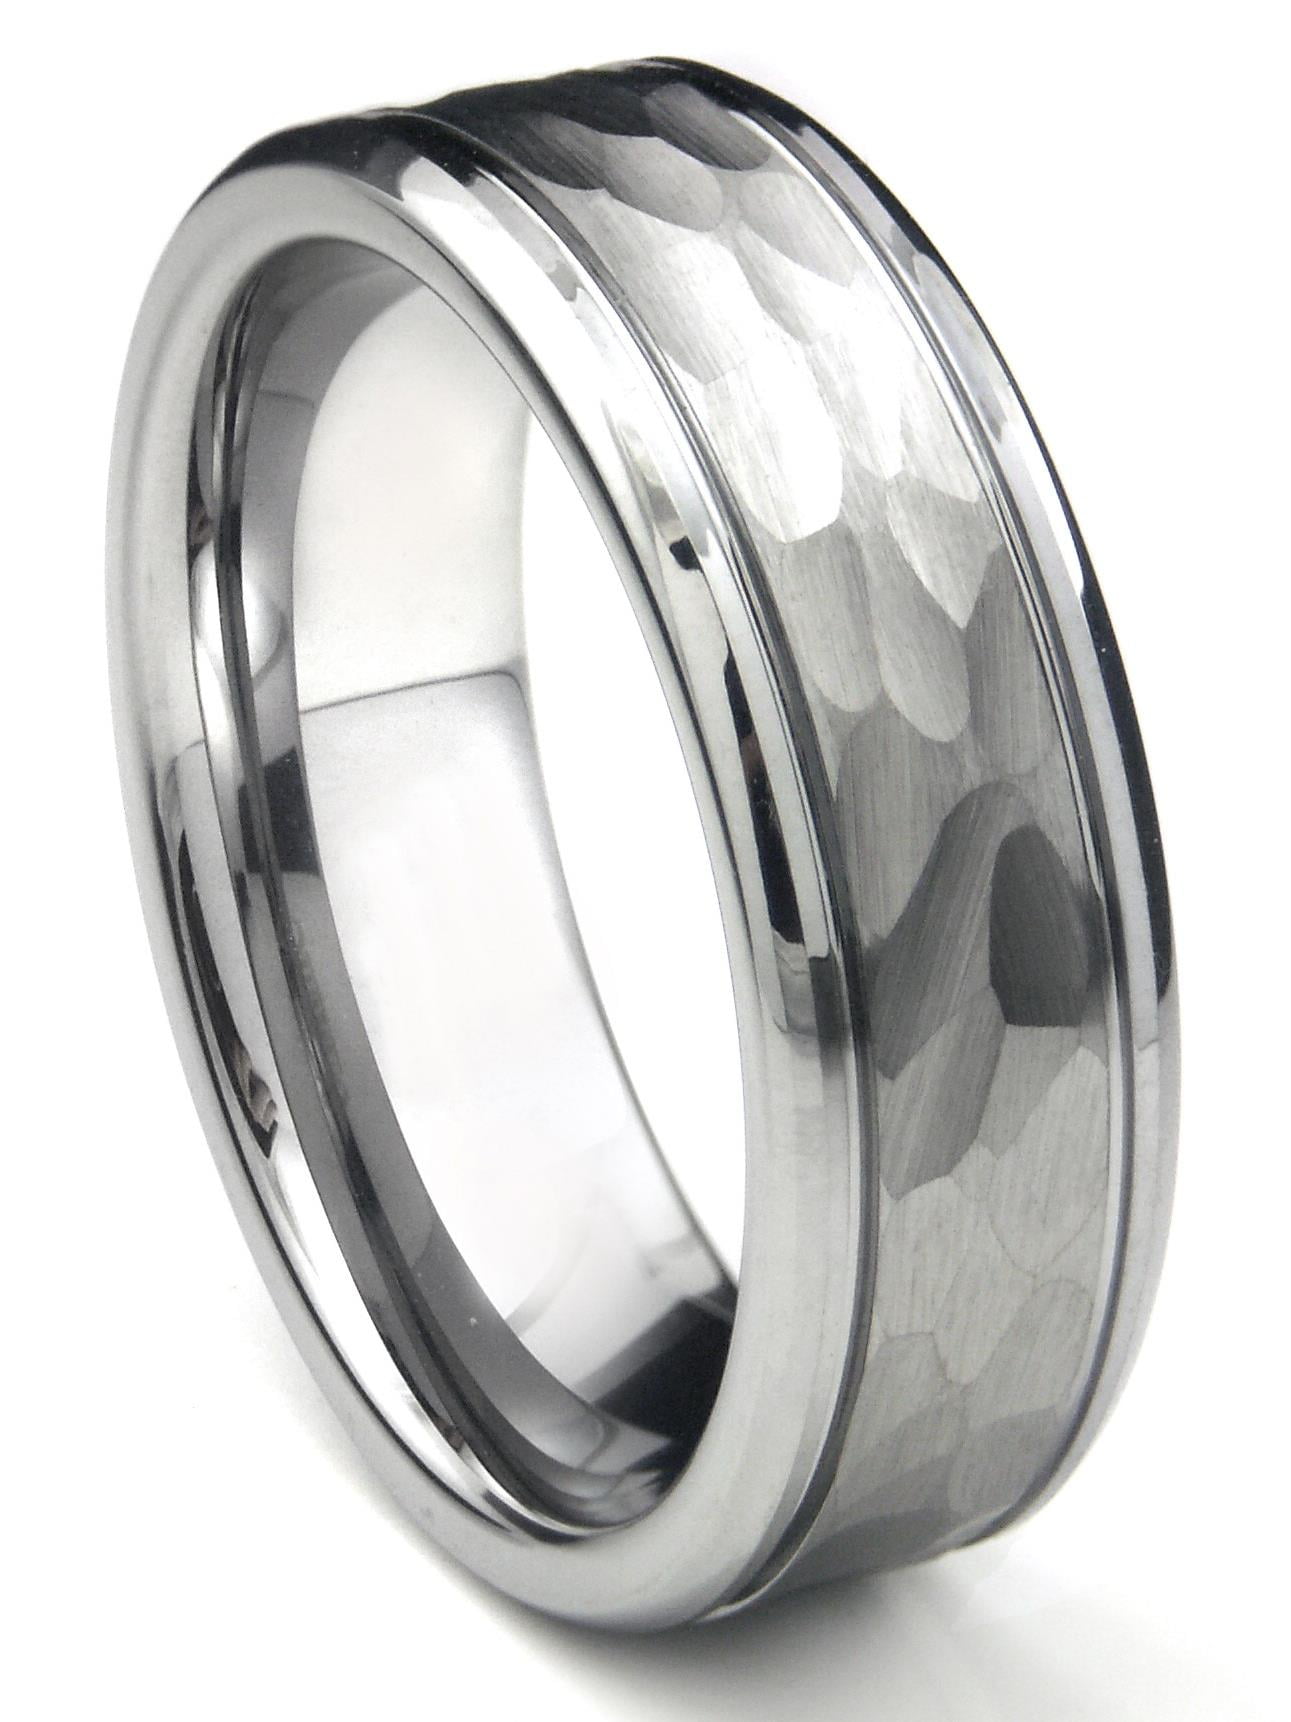 5 Grooves Polished Finish Comfort Fit 9mm Titanium Flat Wedding Band Ring